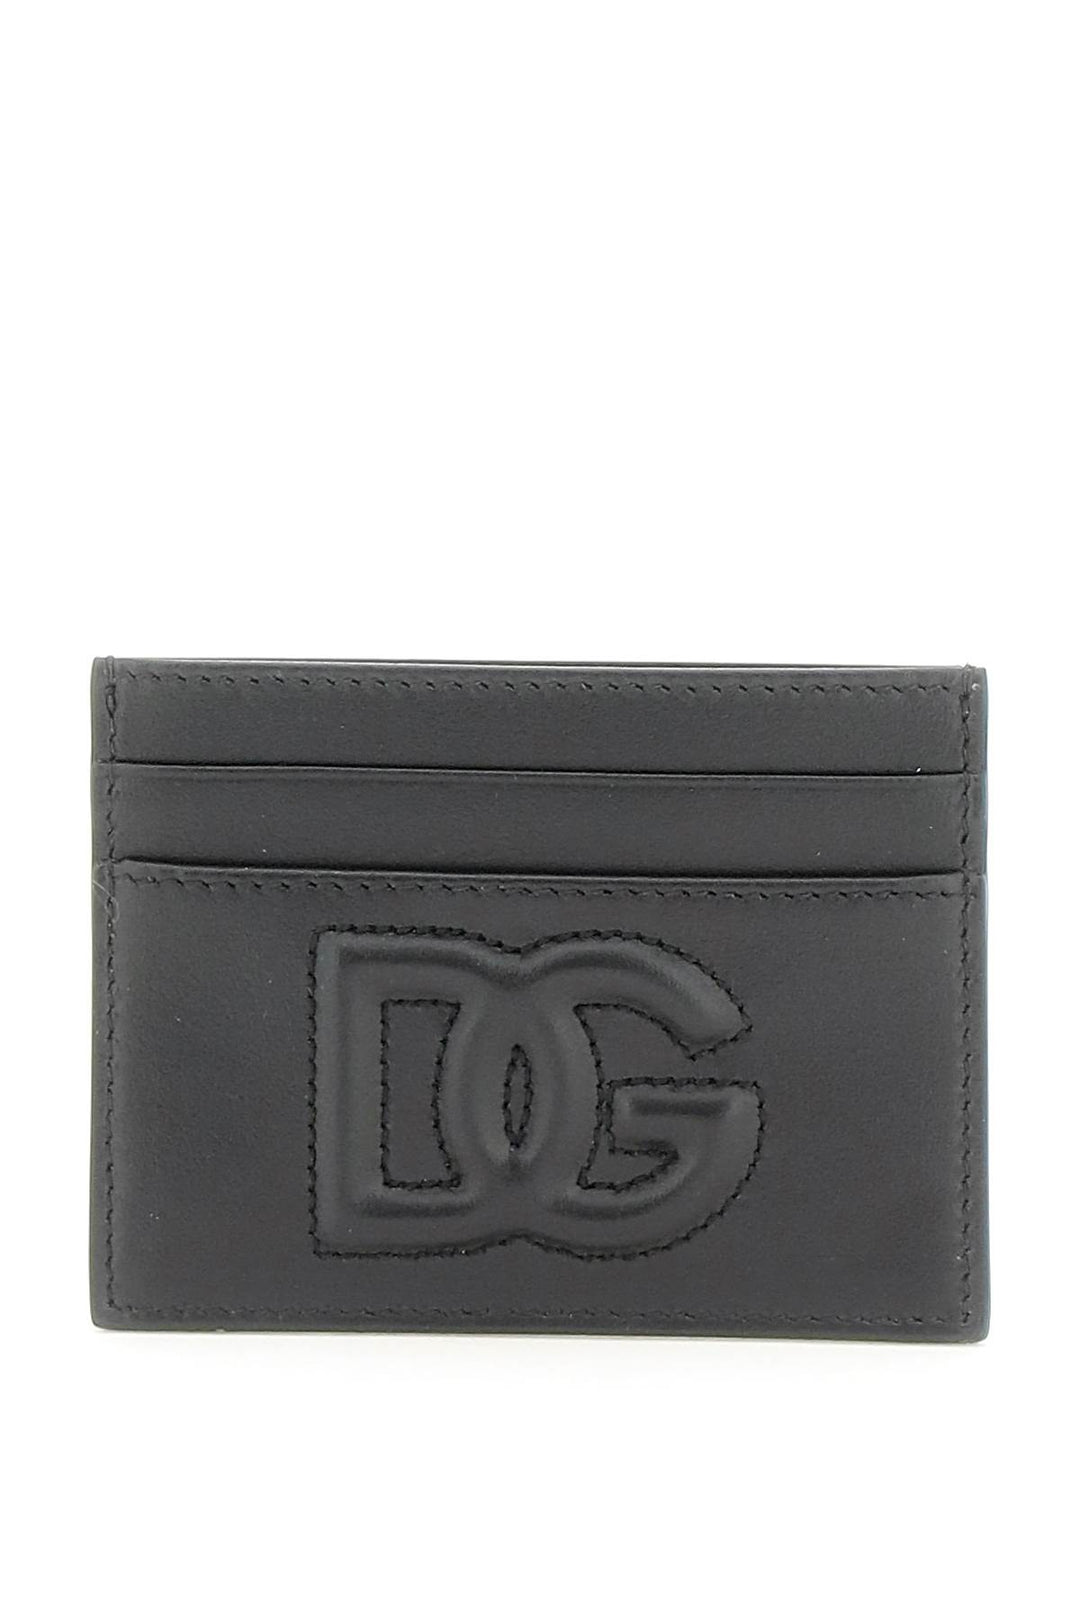 Dolce & Gabbana Cardholder With Logo   Black